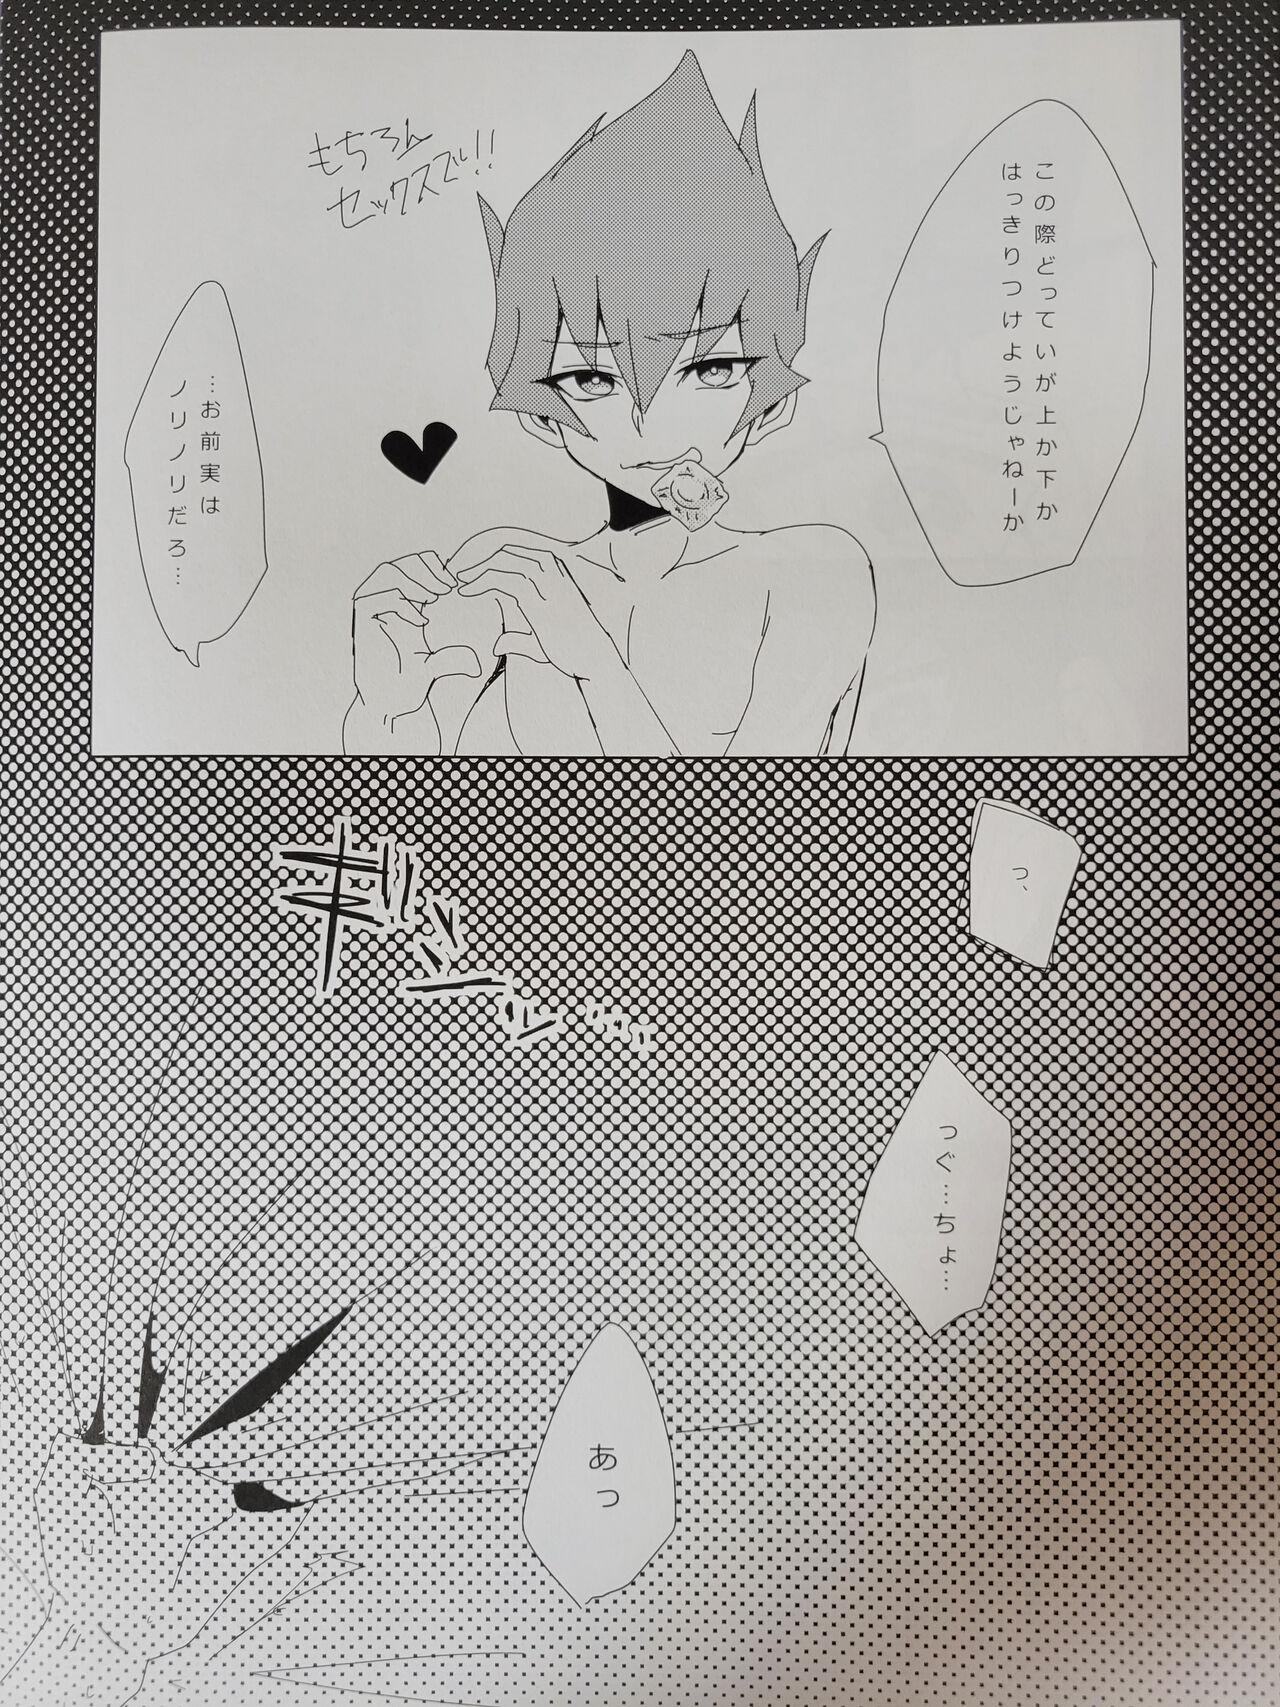 Best Blowjob Ever Aishitai hodo Kiss Shiyou. - Yu gi oh zexal Soapy - Page 7